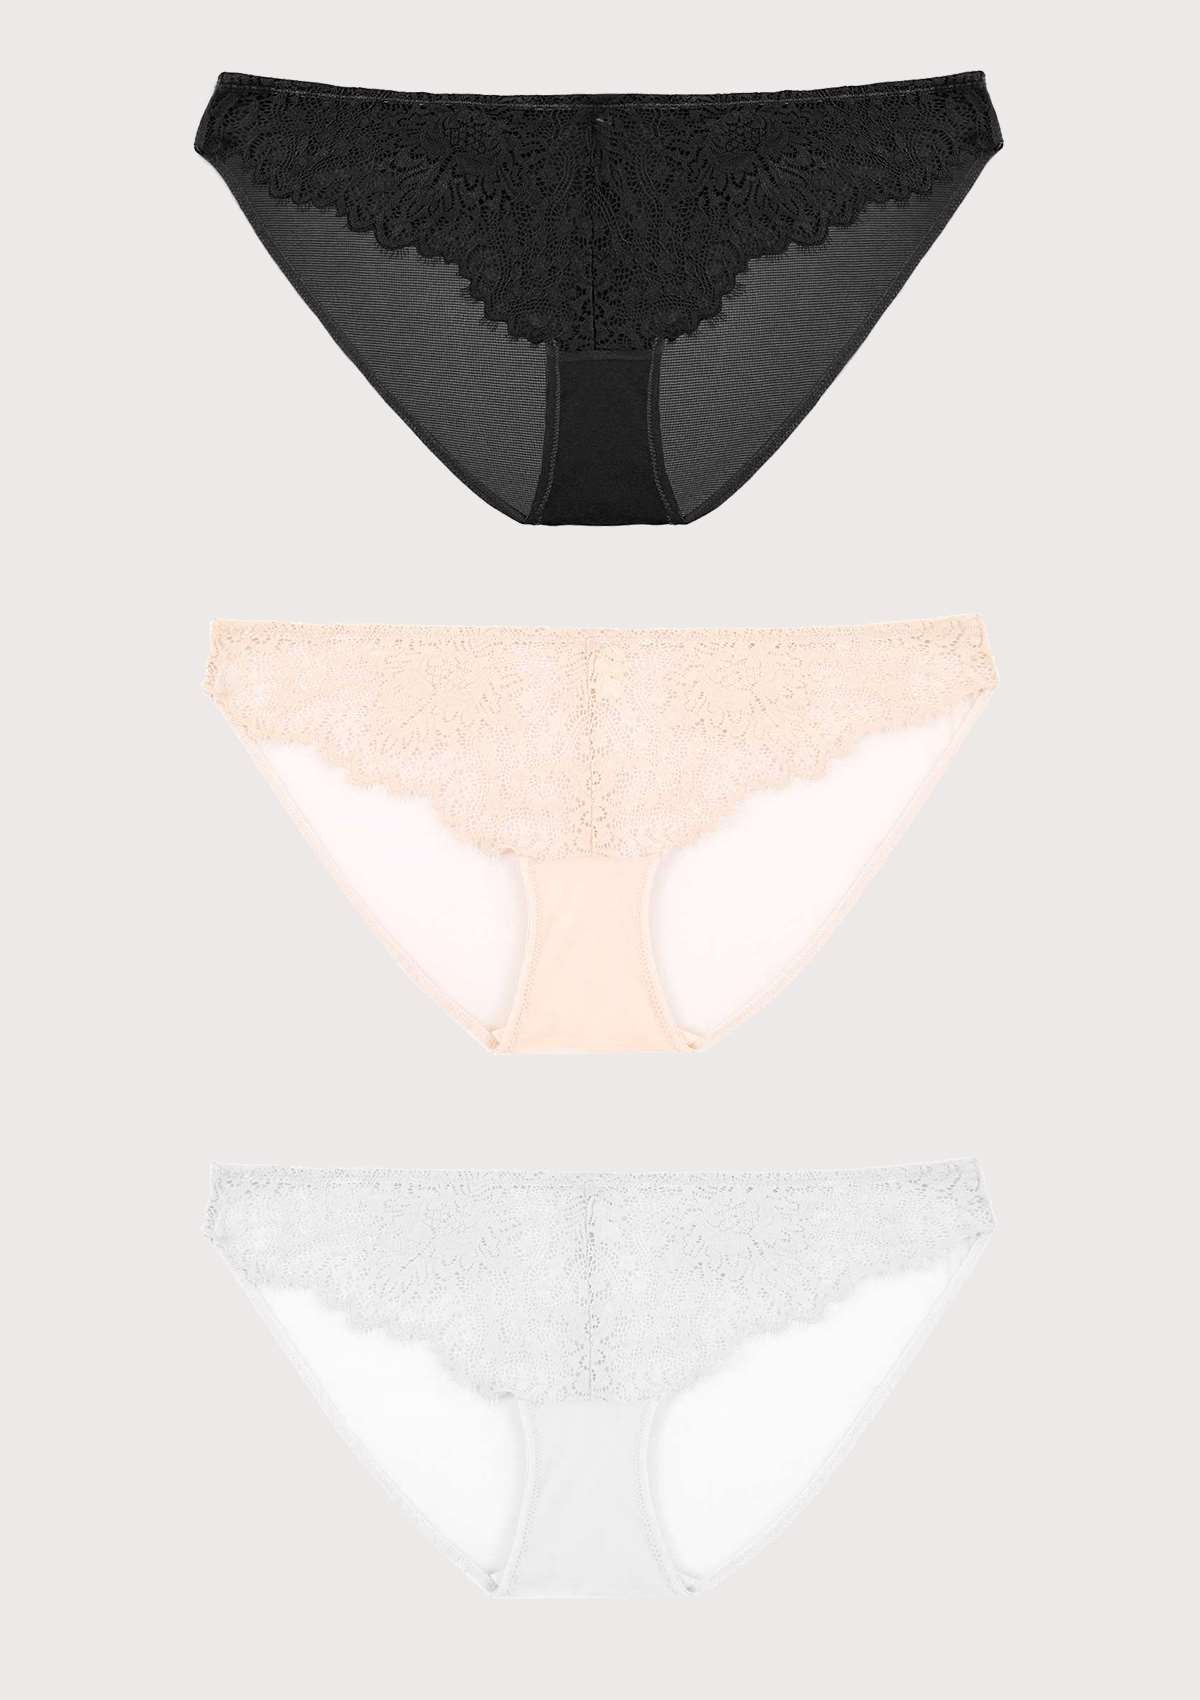 HSIA Sunflower Exquisite Lighweight Soft Lace Bikini Panties 3 Pack - XXL / Black+Horizon Blue+Pink